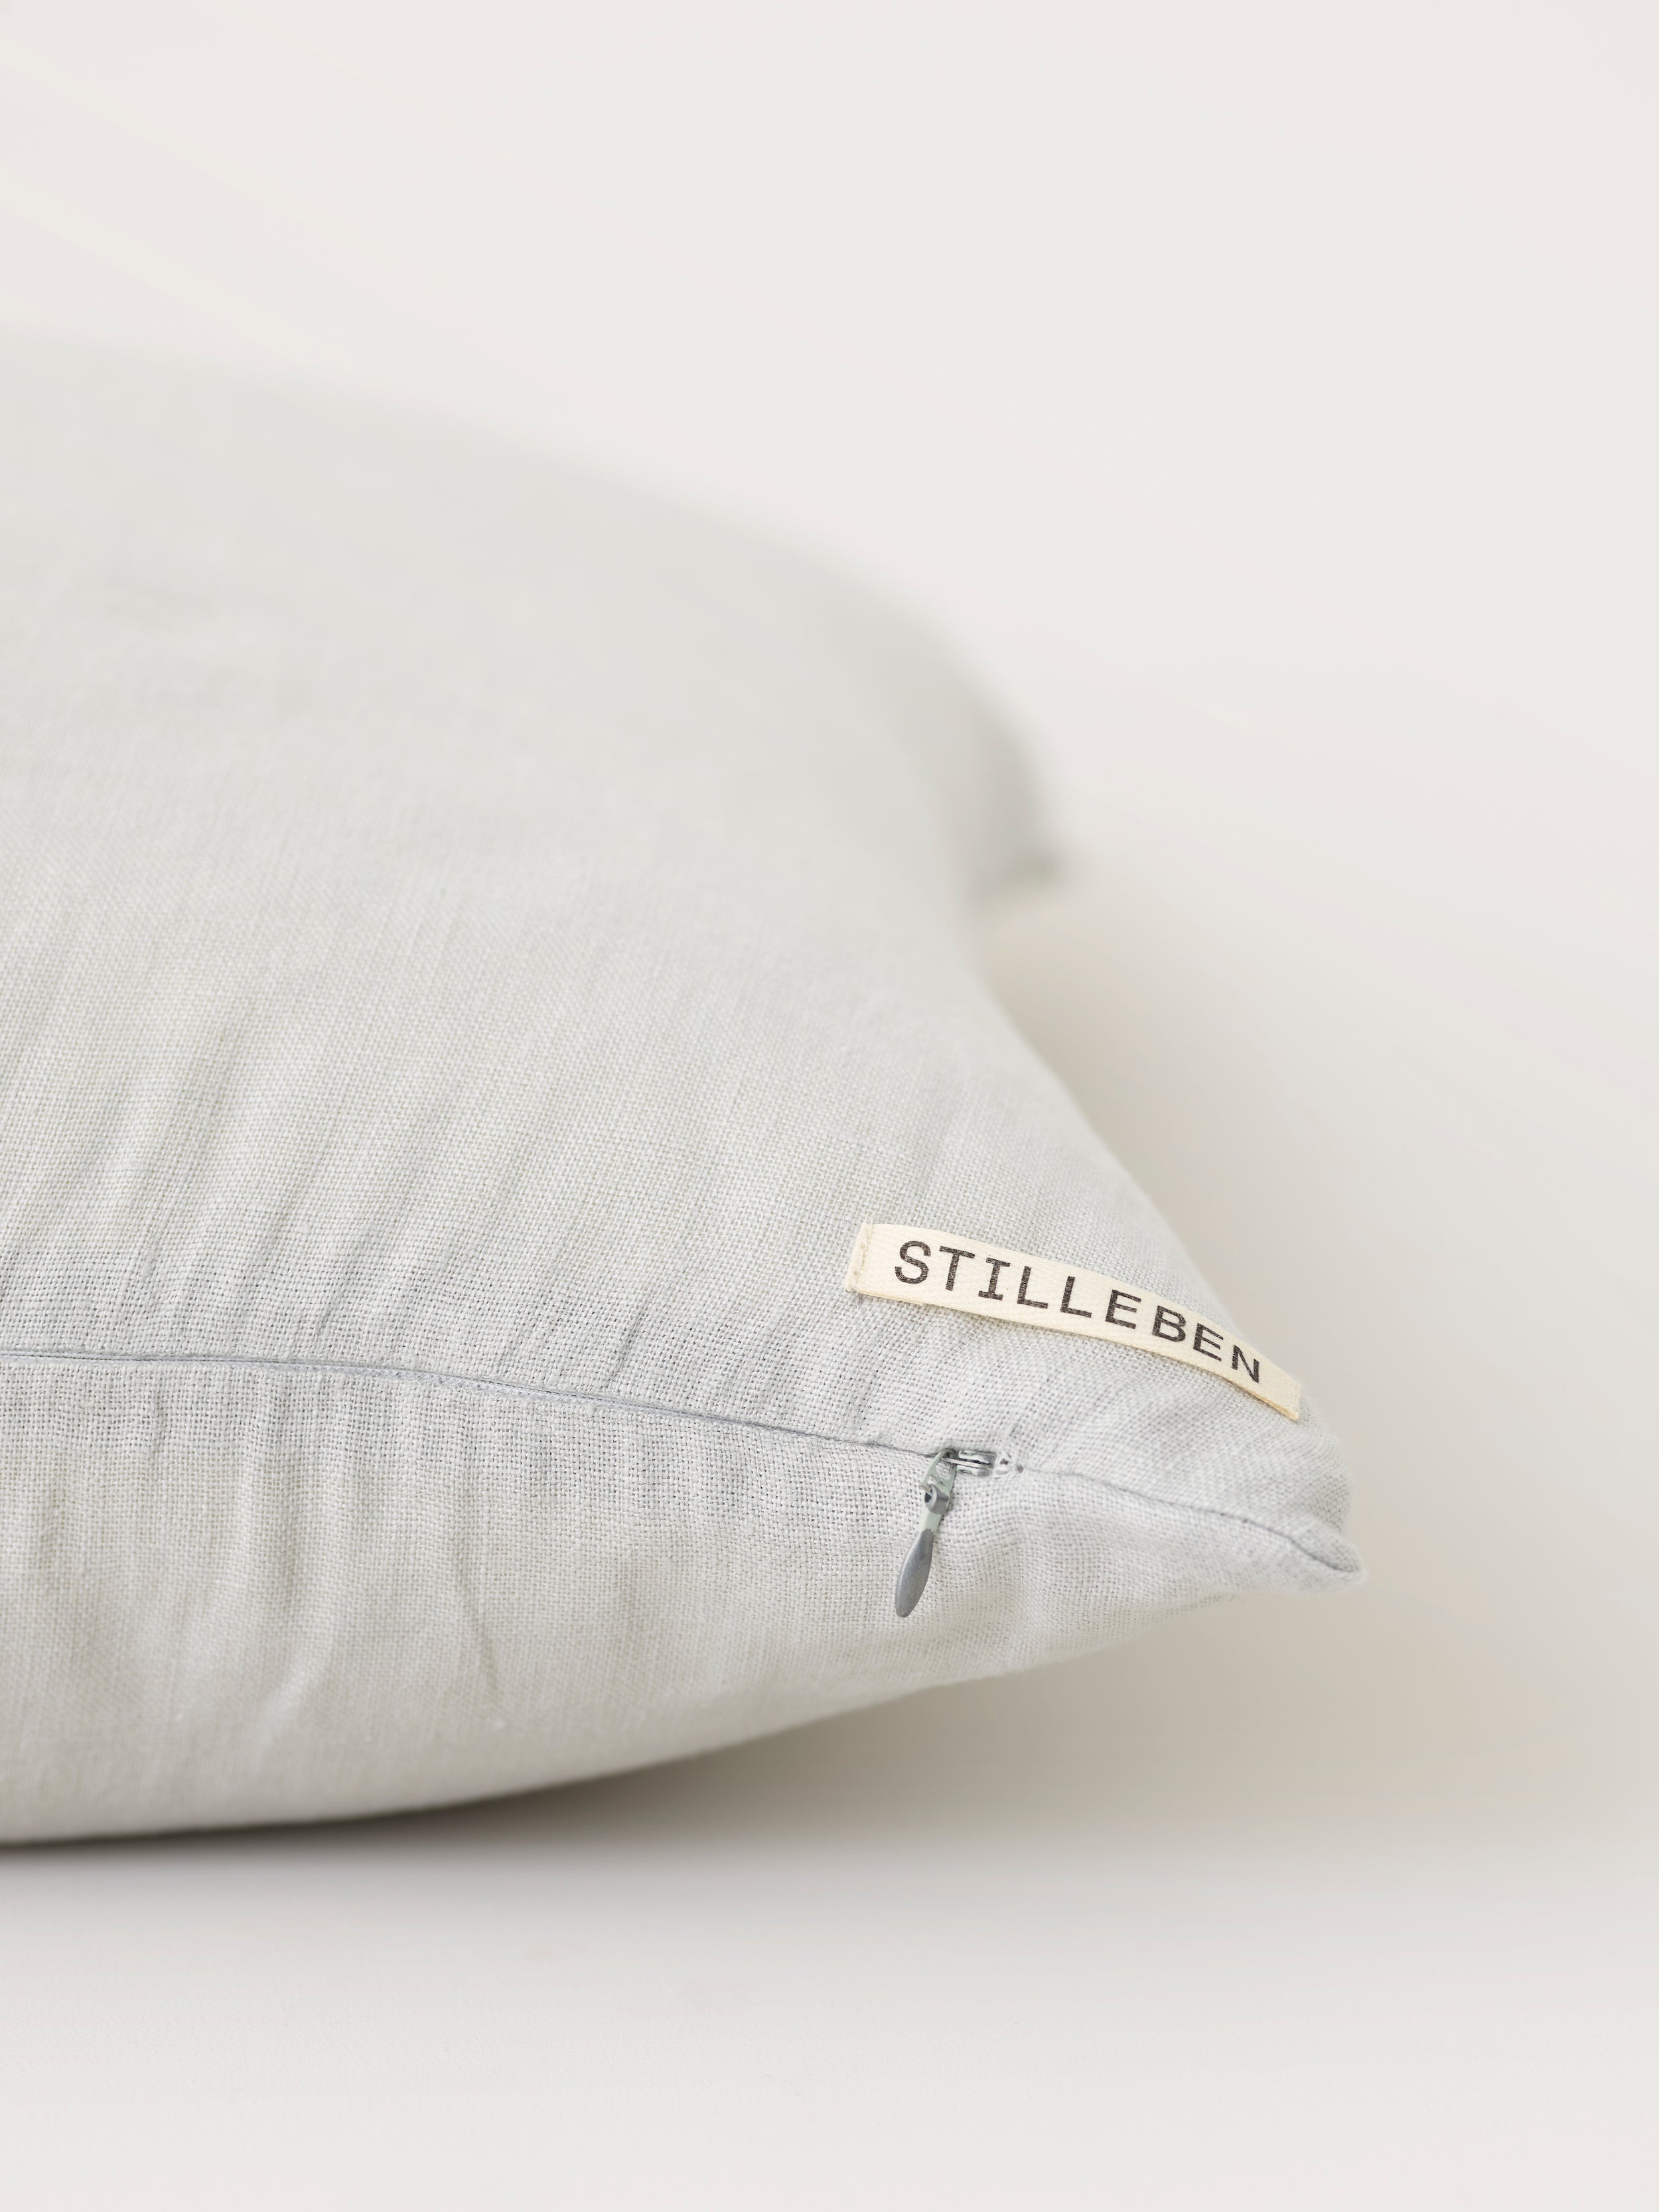 Stilleben cushion cover grey